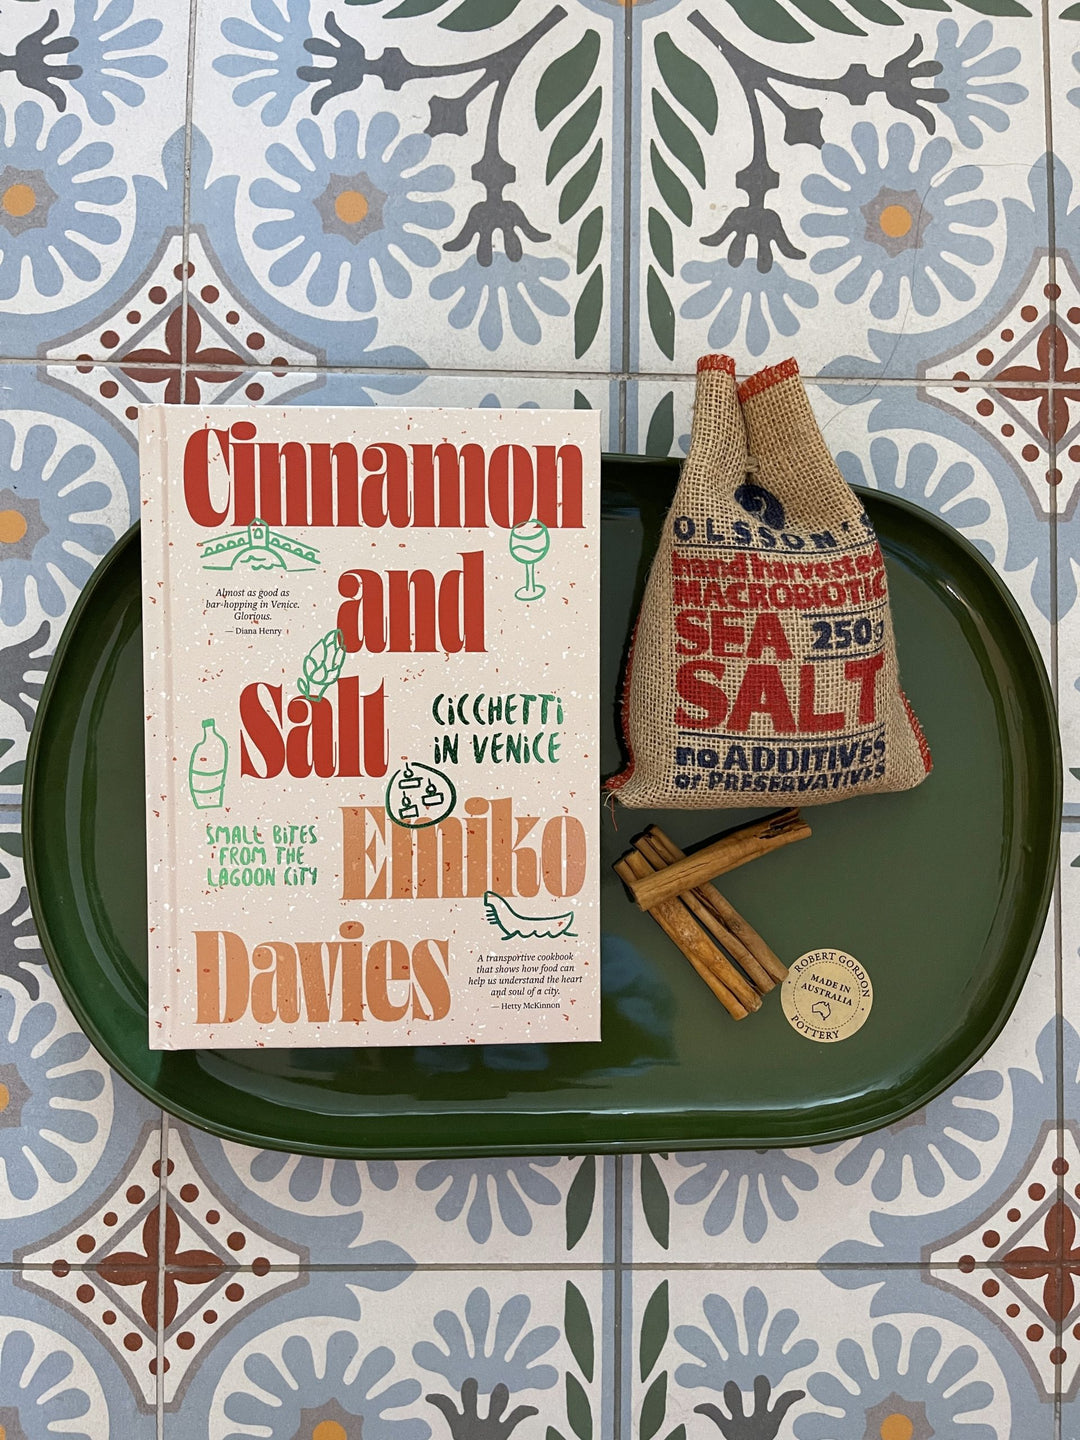 Cinnamon & Salt: Cicchetti in Venice by Emiko Davies